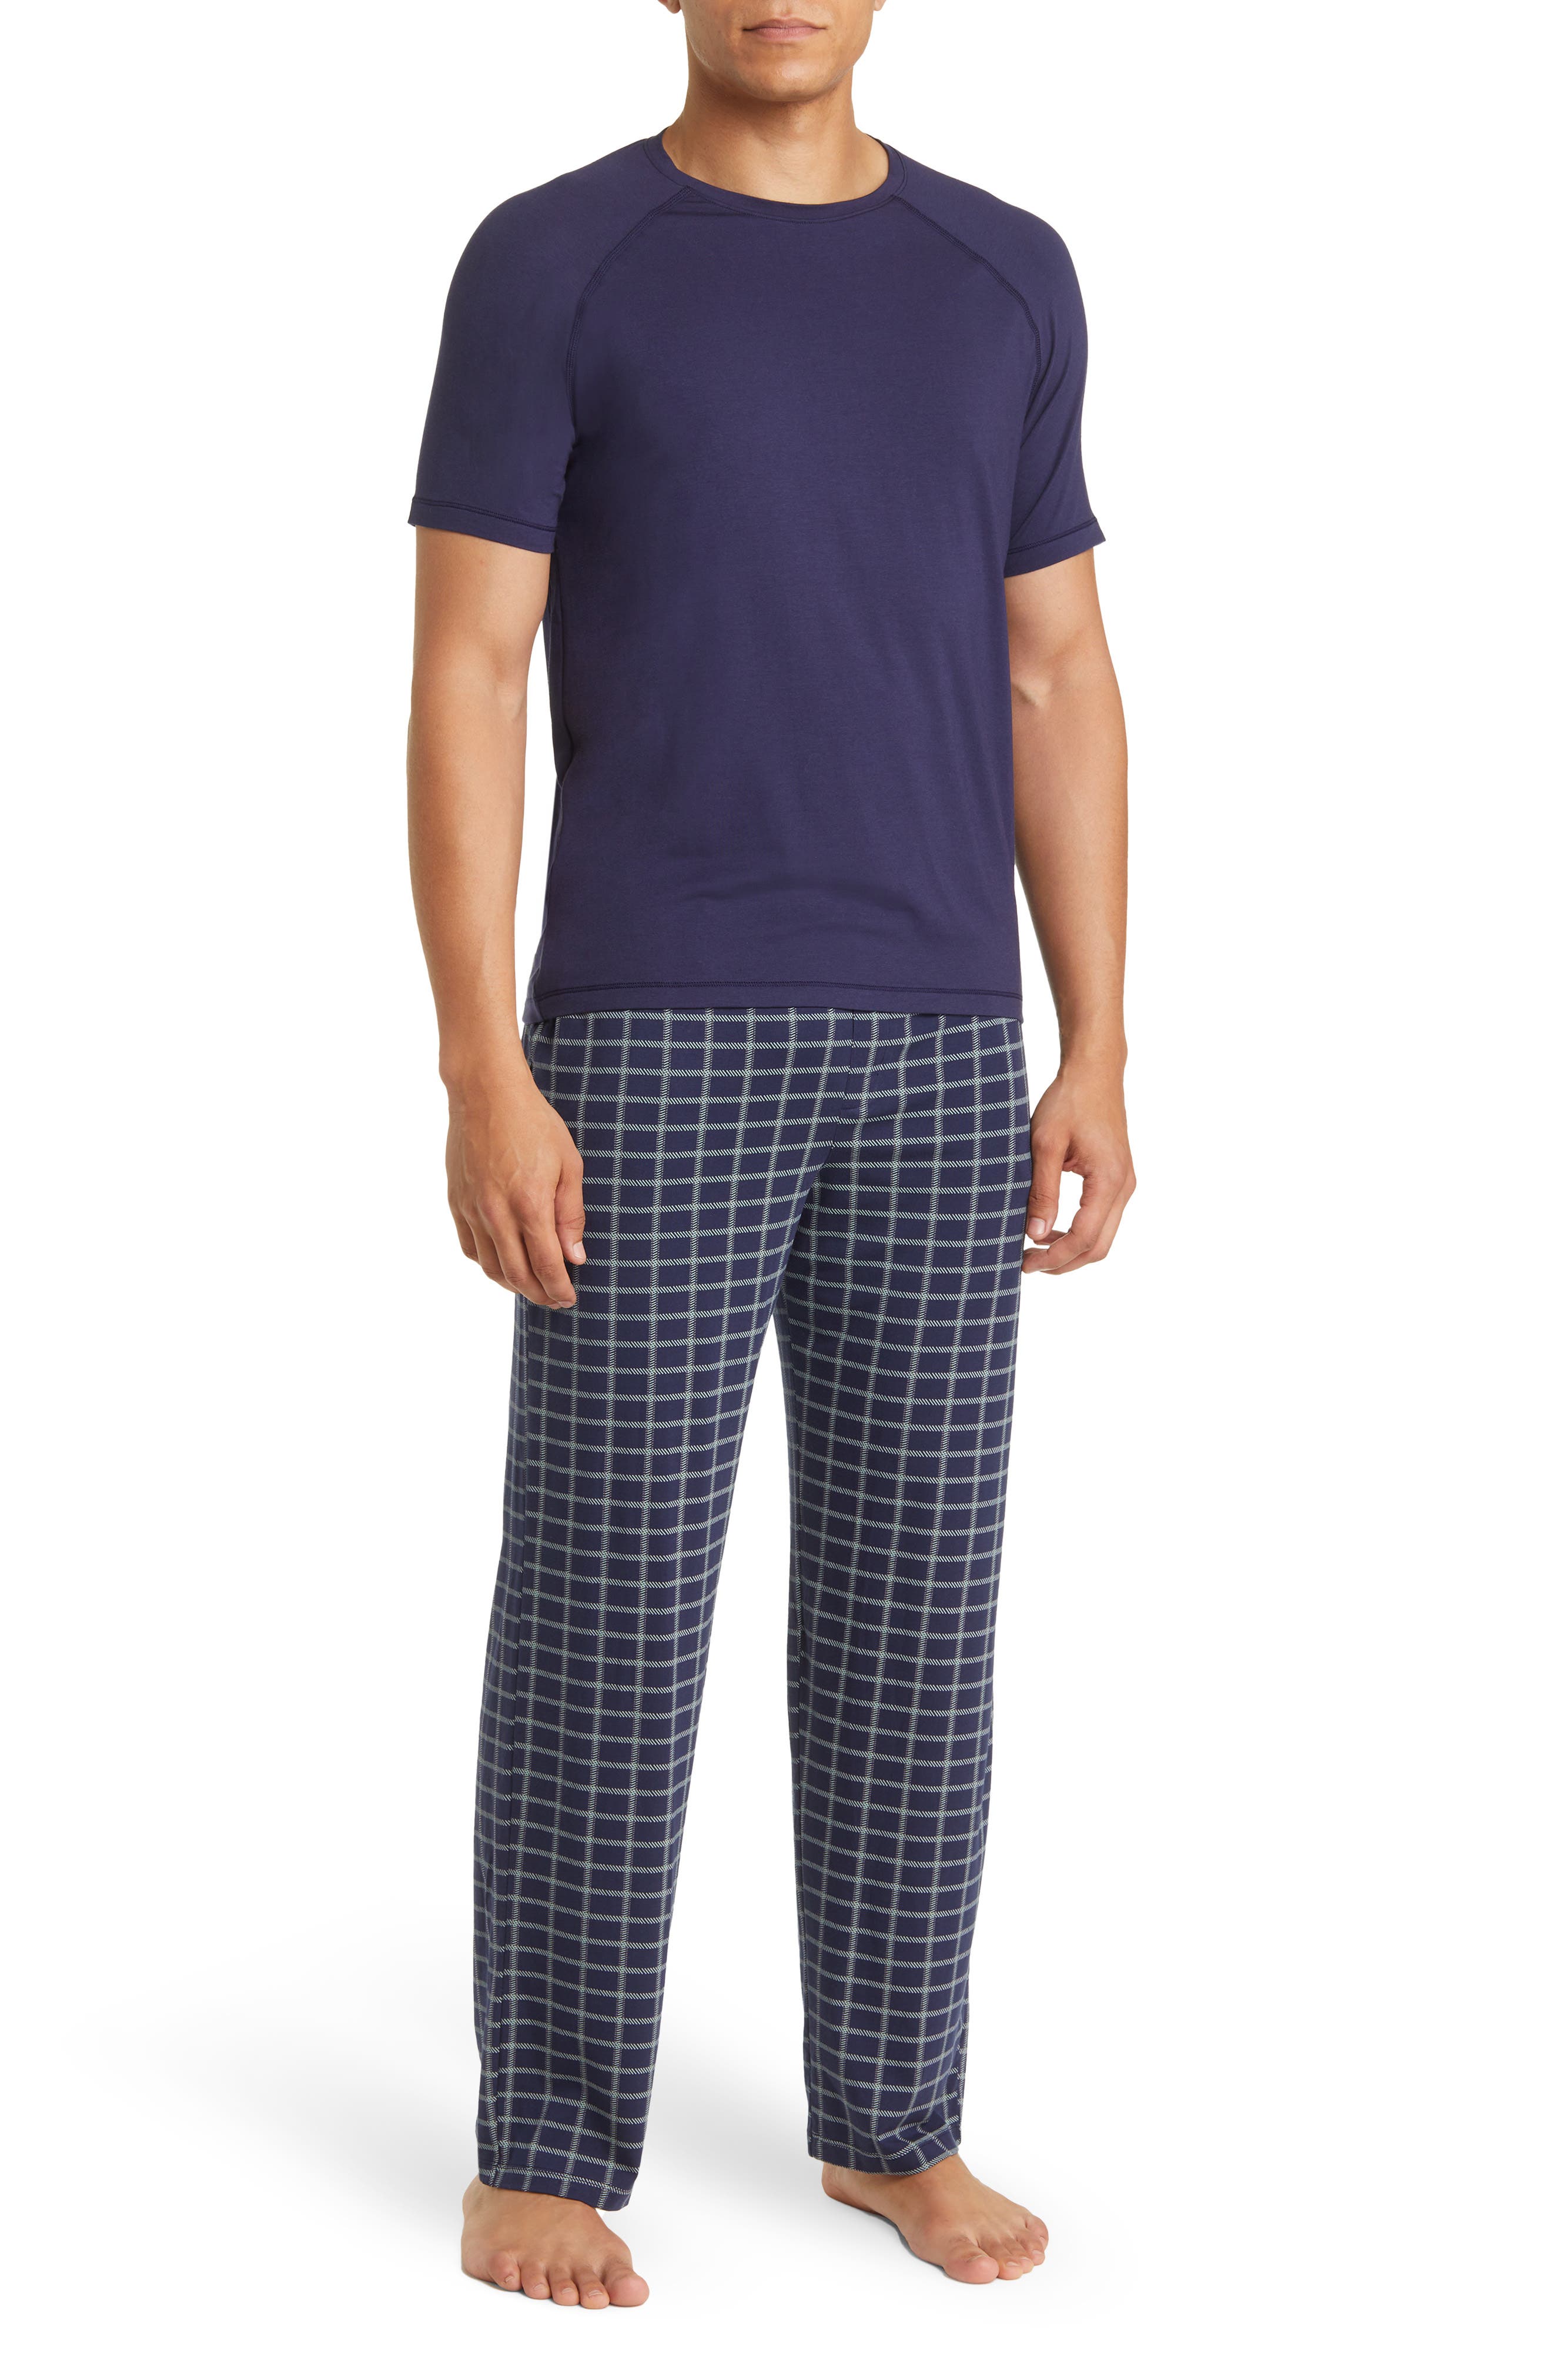 Mens Pyjama Sets Jersey Tee Shorts Crew Neck Pocket Lounge Sleepwear M to XXL 